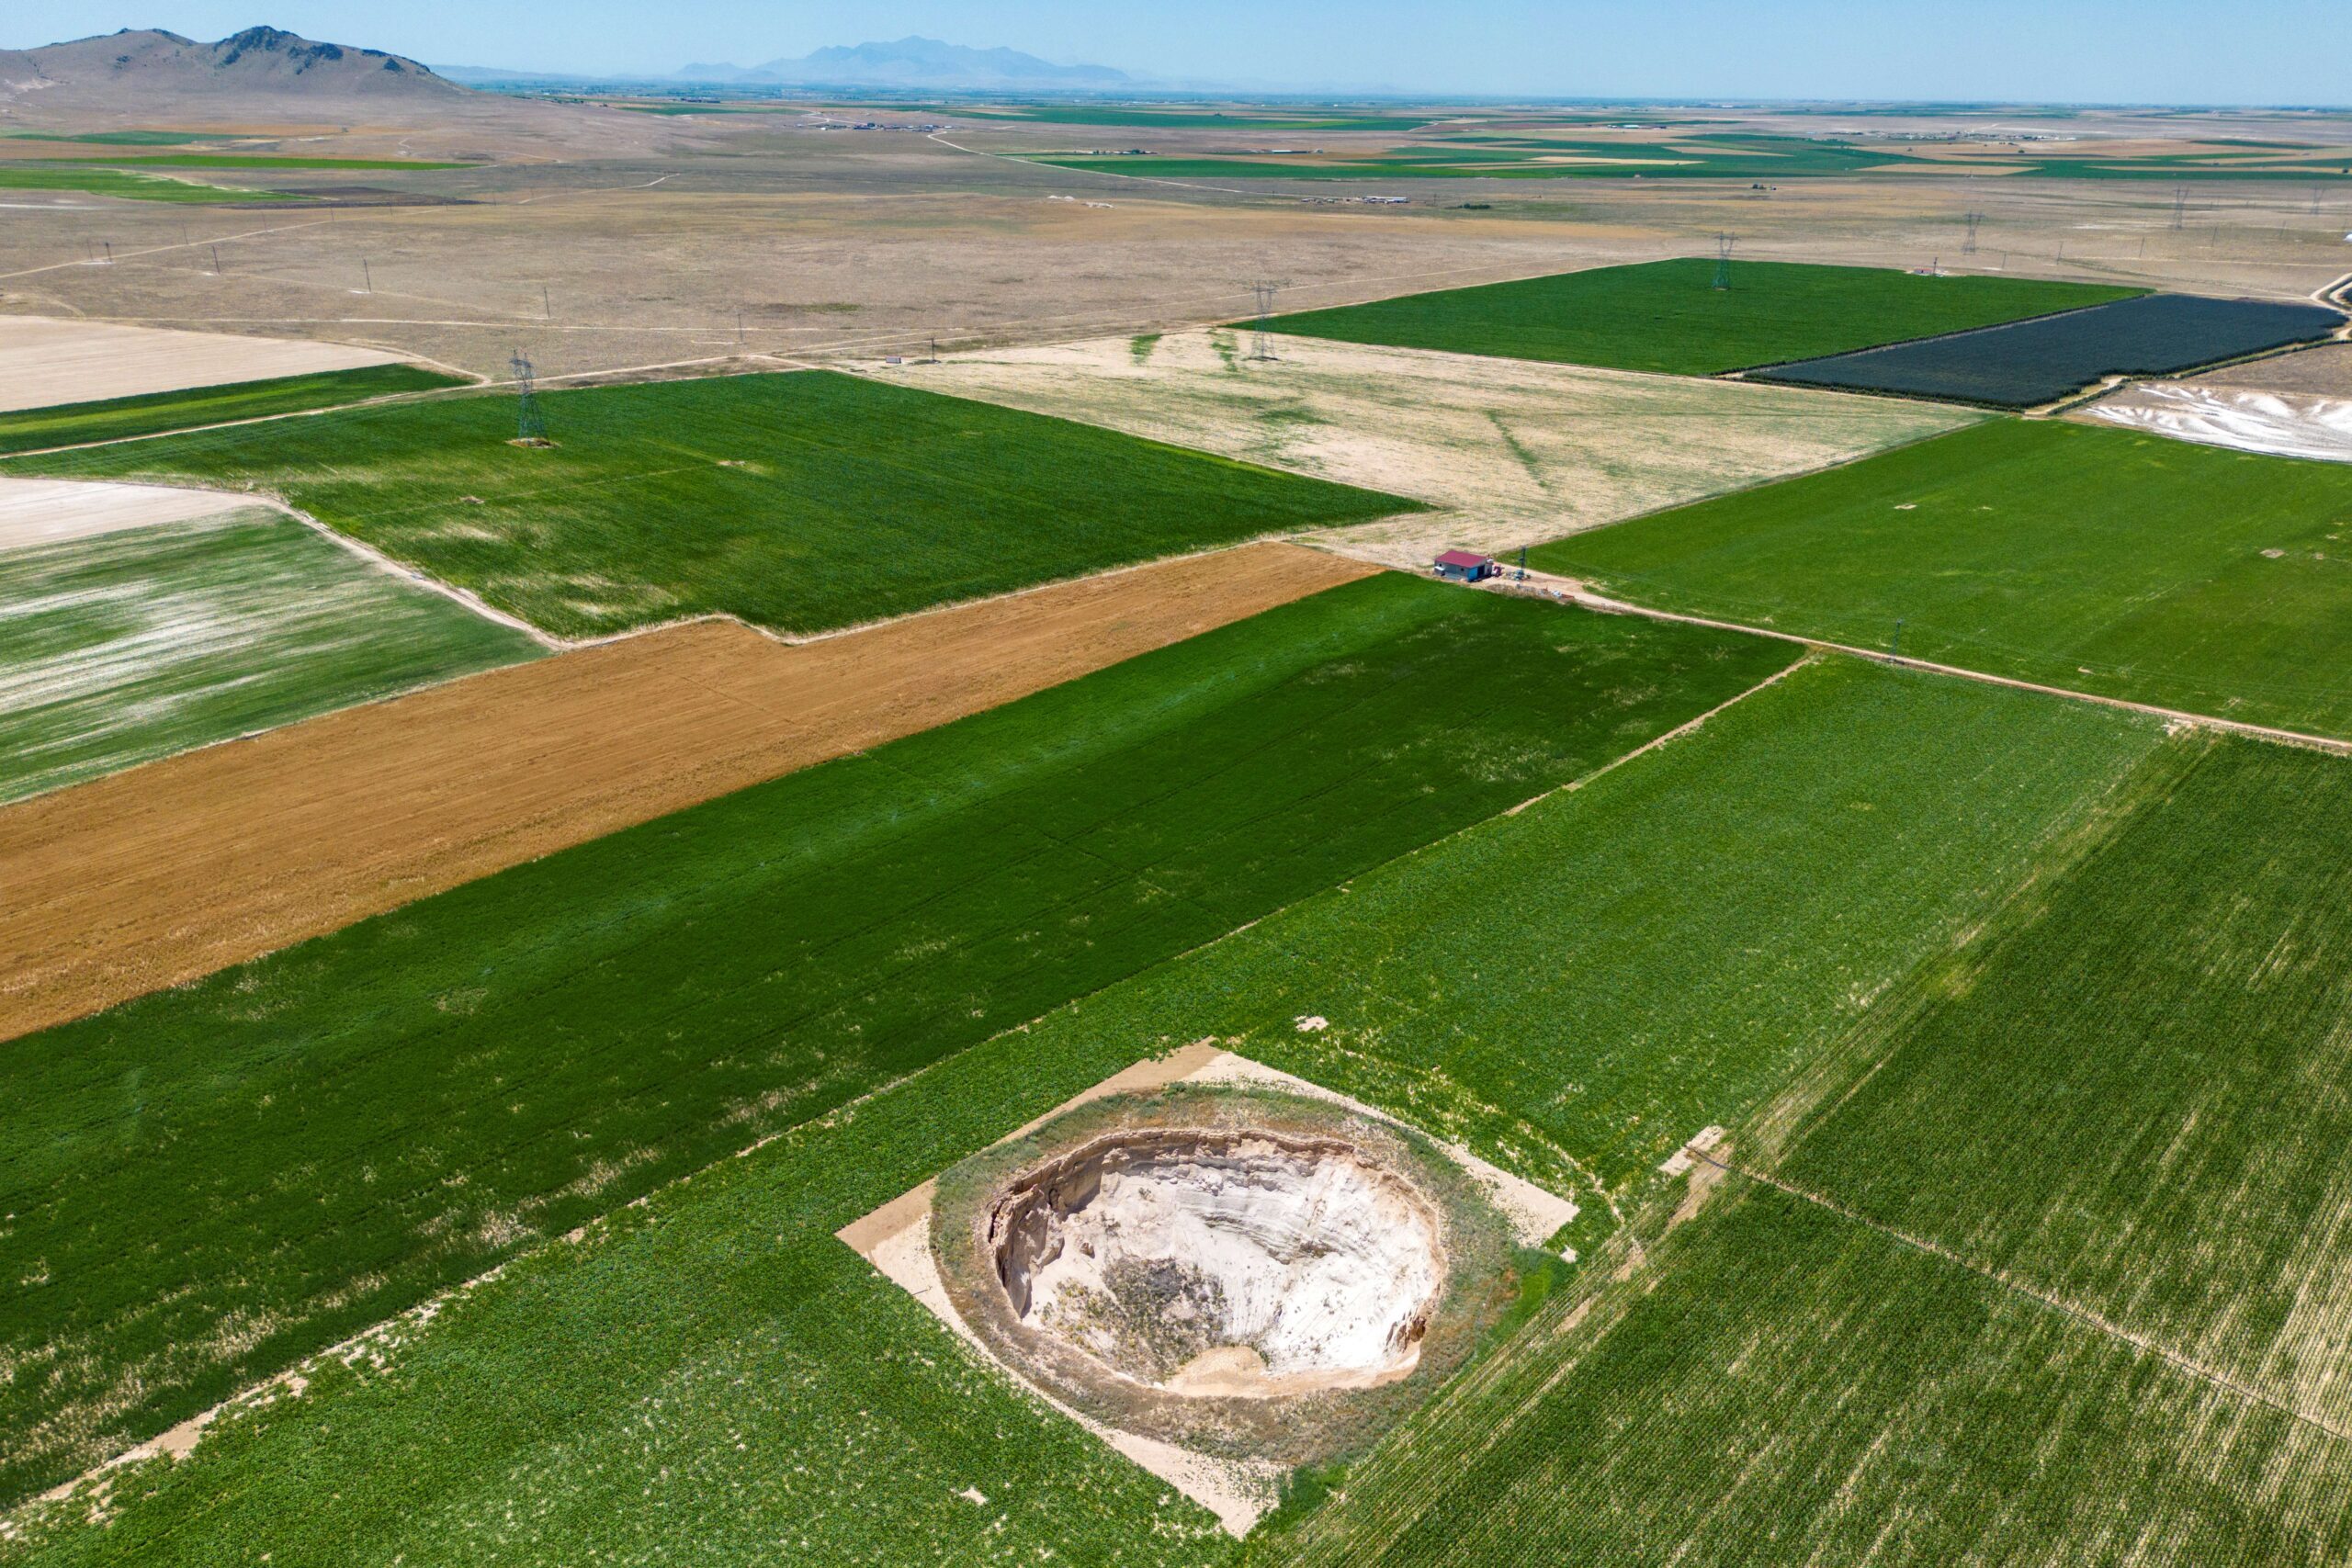 How do sinkholes threaten Turkish farmers' livelihoods in Konya?